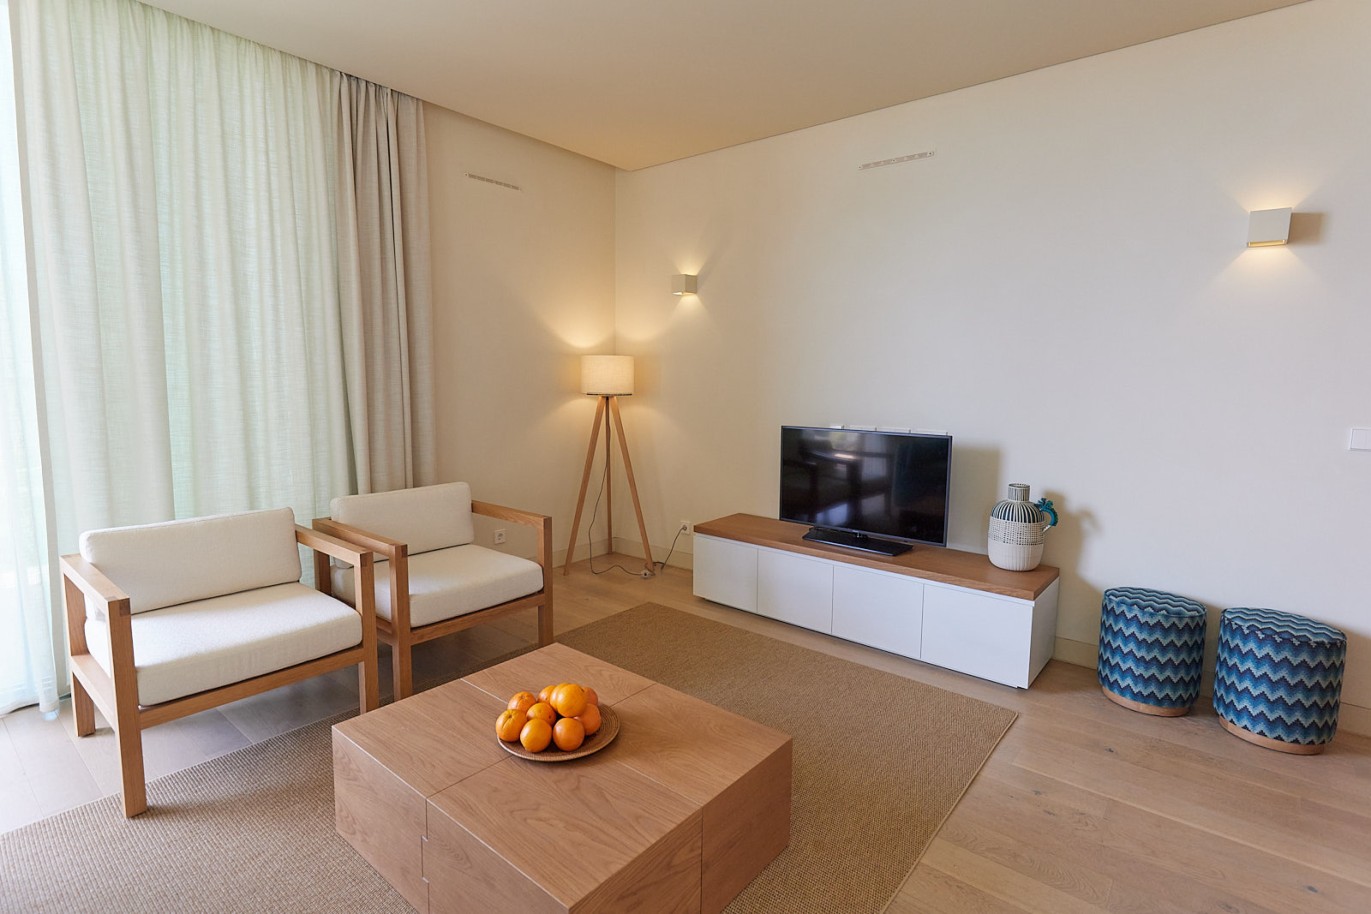 2 bedroom apartment in resort, for sale in Porches, Algarve_229253